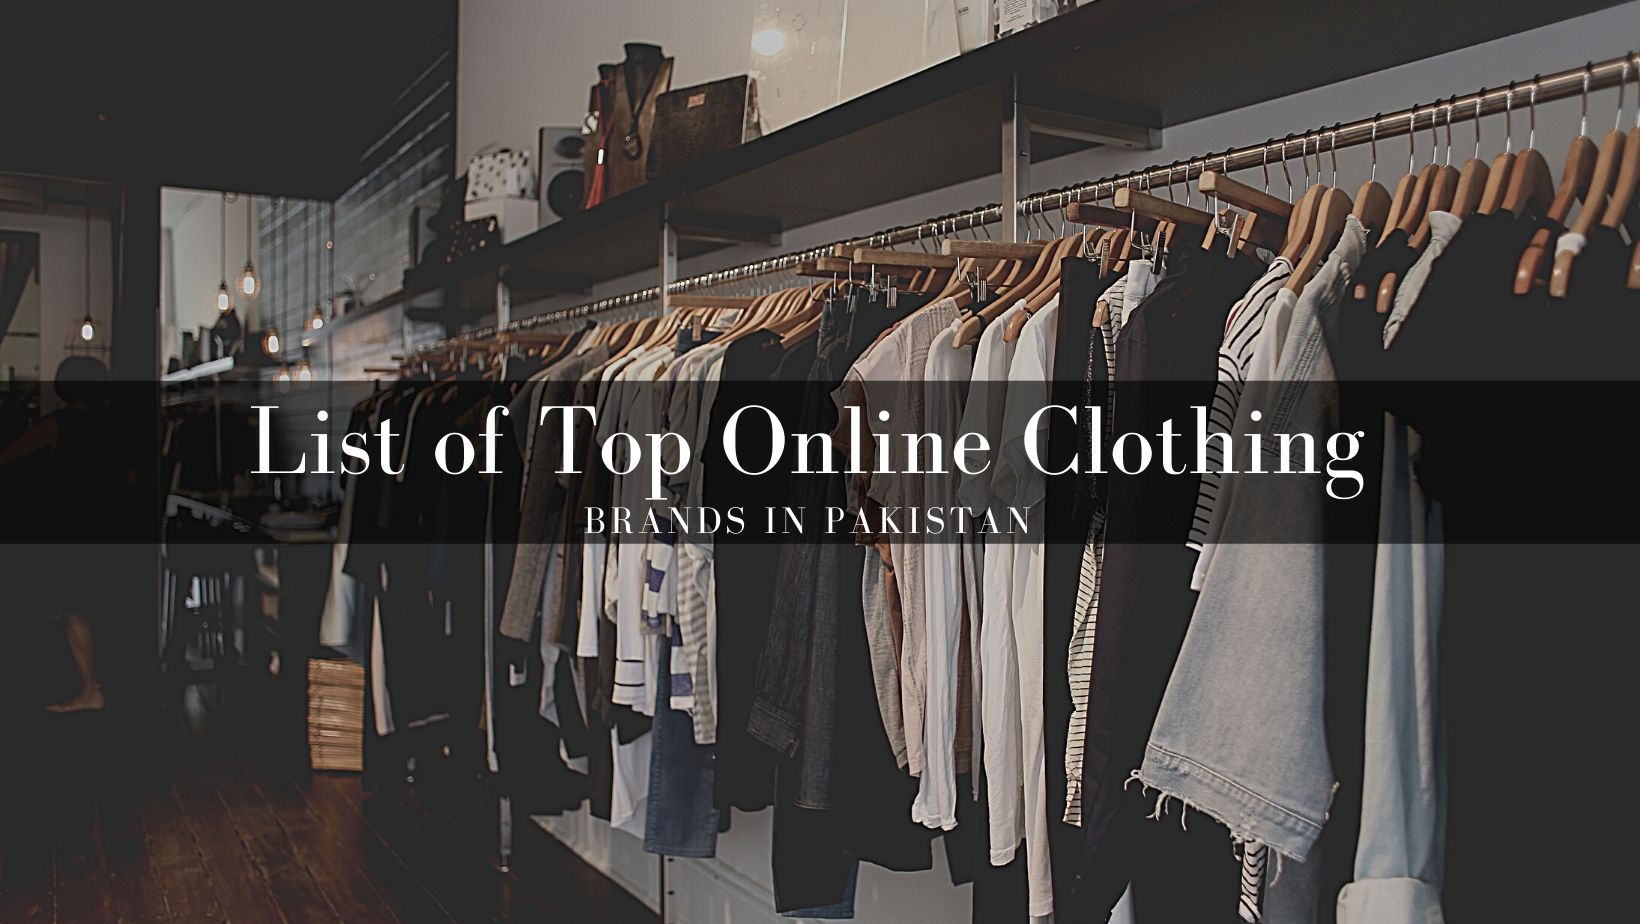 List of Top Online Clothing Brands in Pakistan